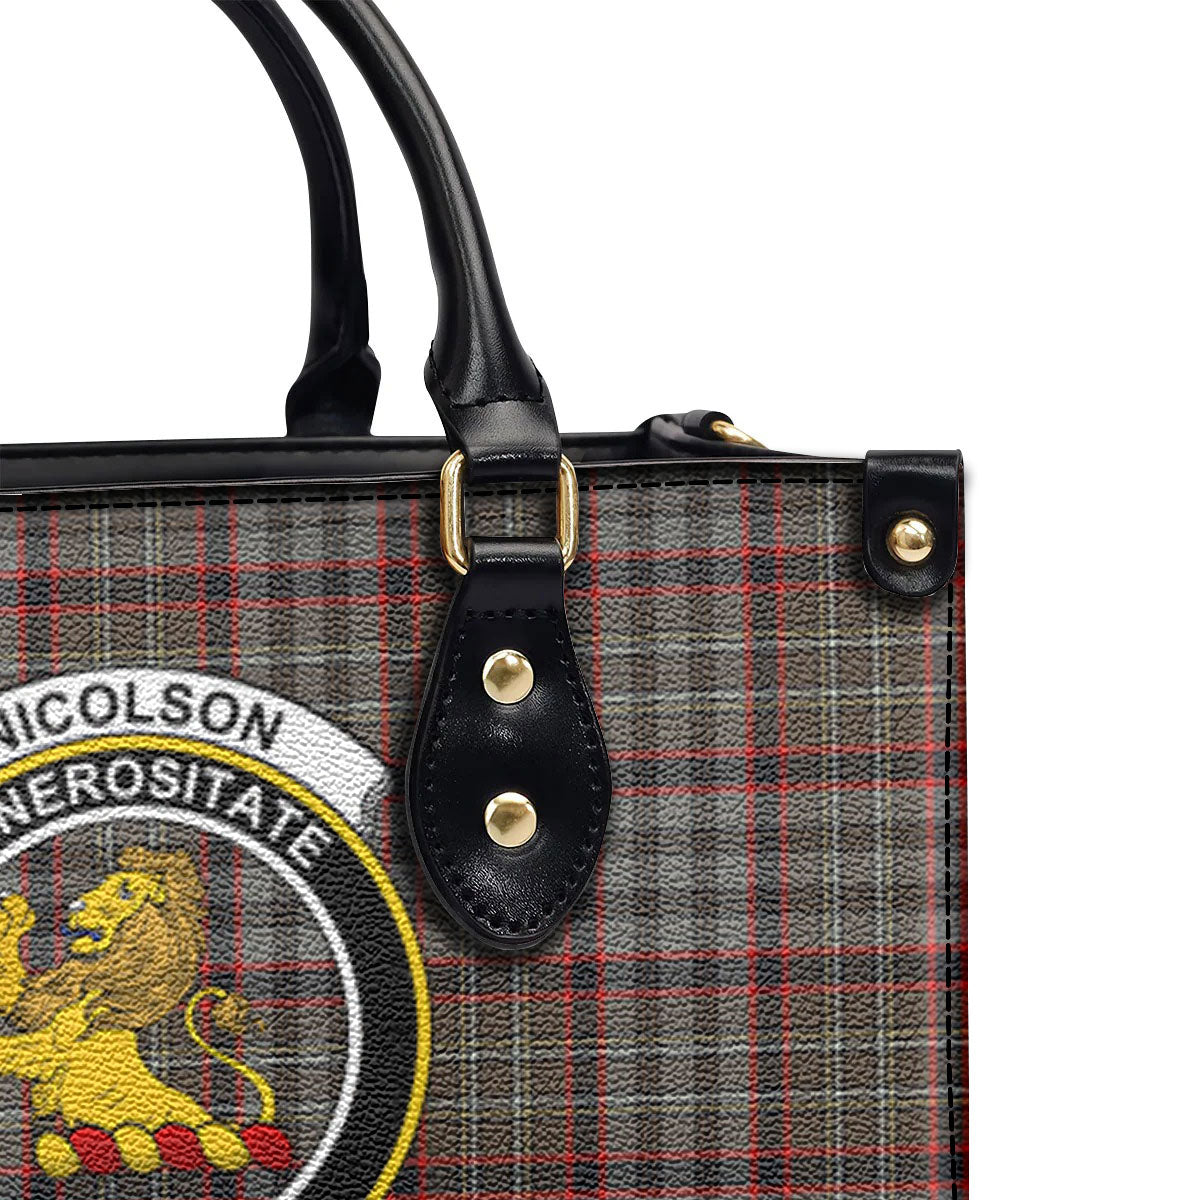 Nicolson Hunting Weathered Tartan Crest Leather Handbag